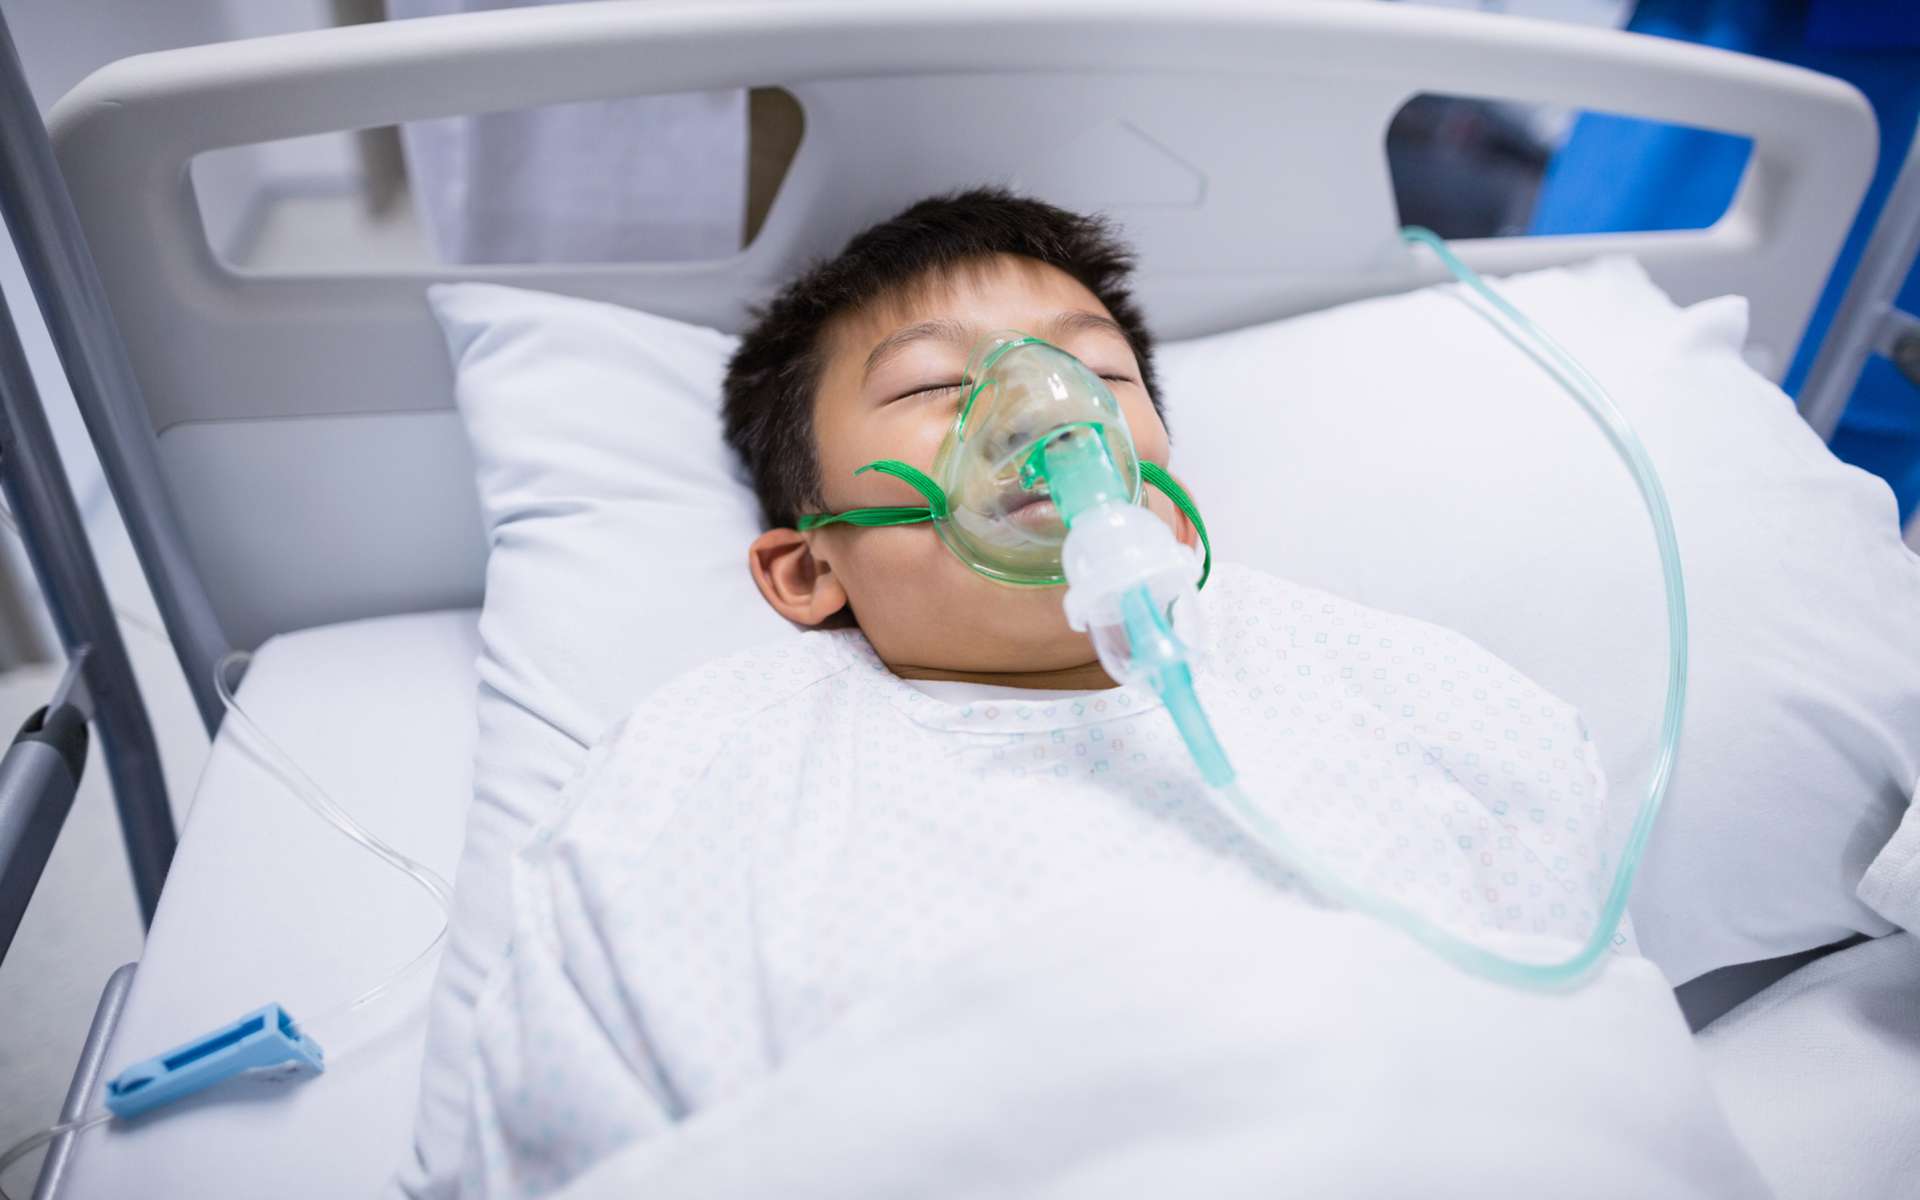 Deux cas de peste pulmonaire signalés à Pékin. © Wavebreakmedia, IStock.com